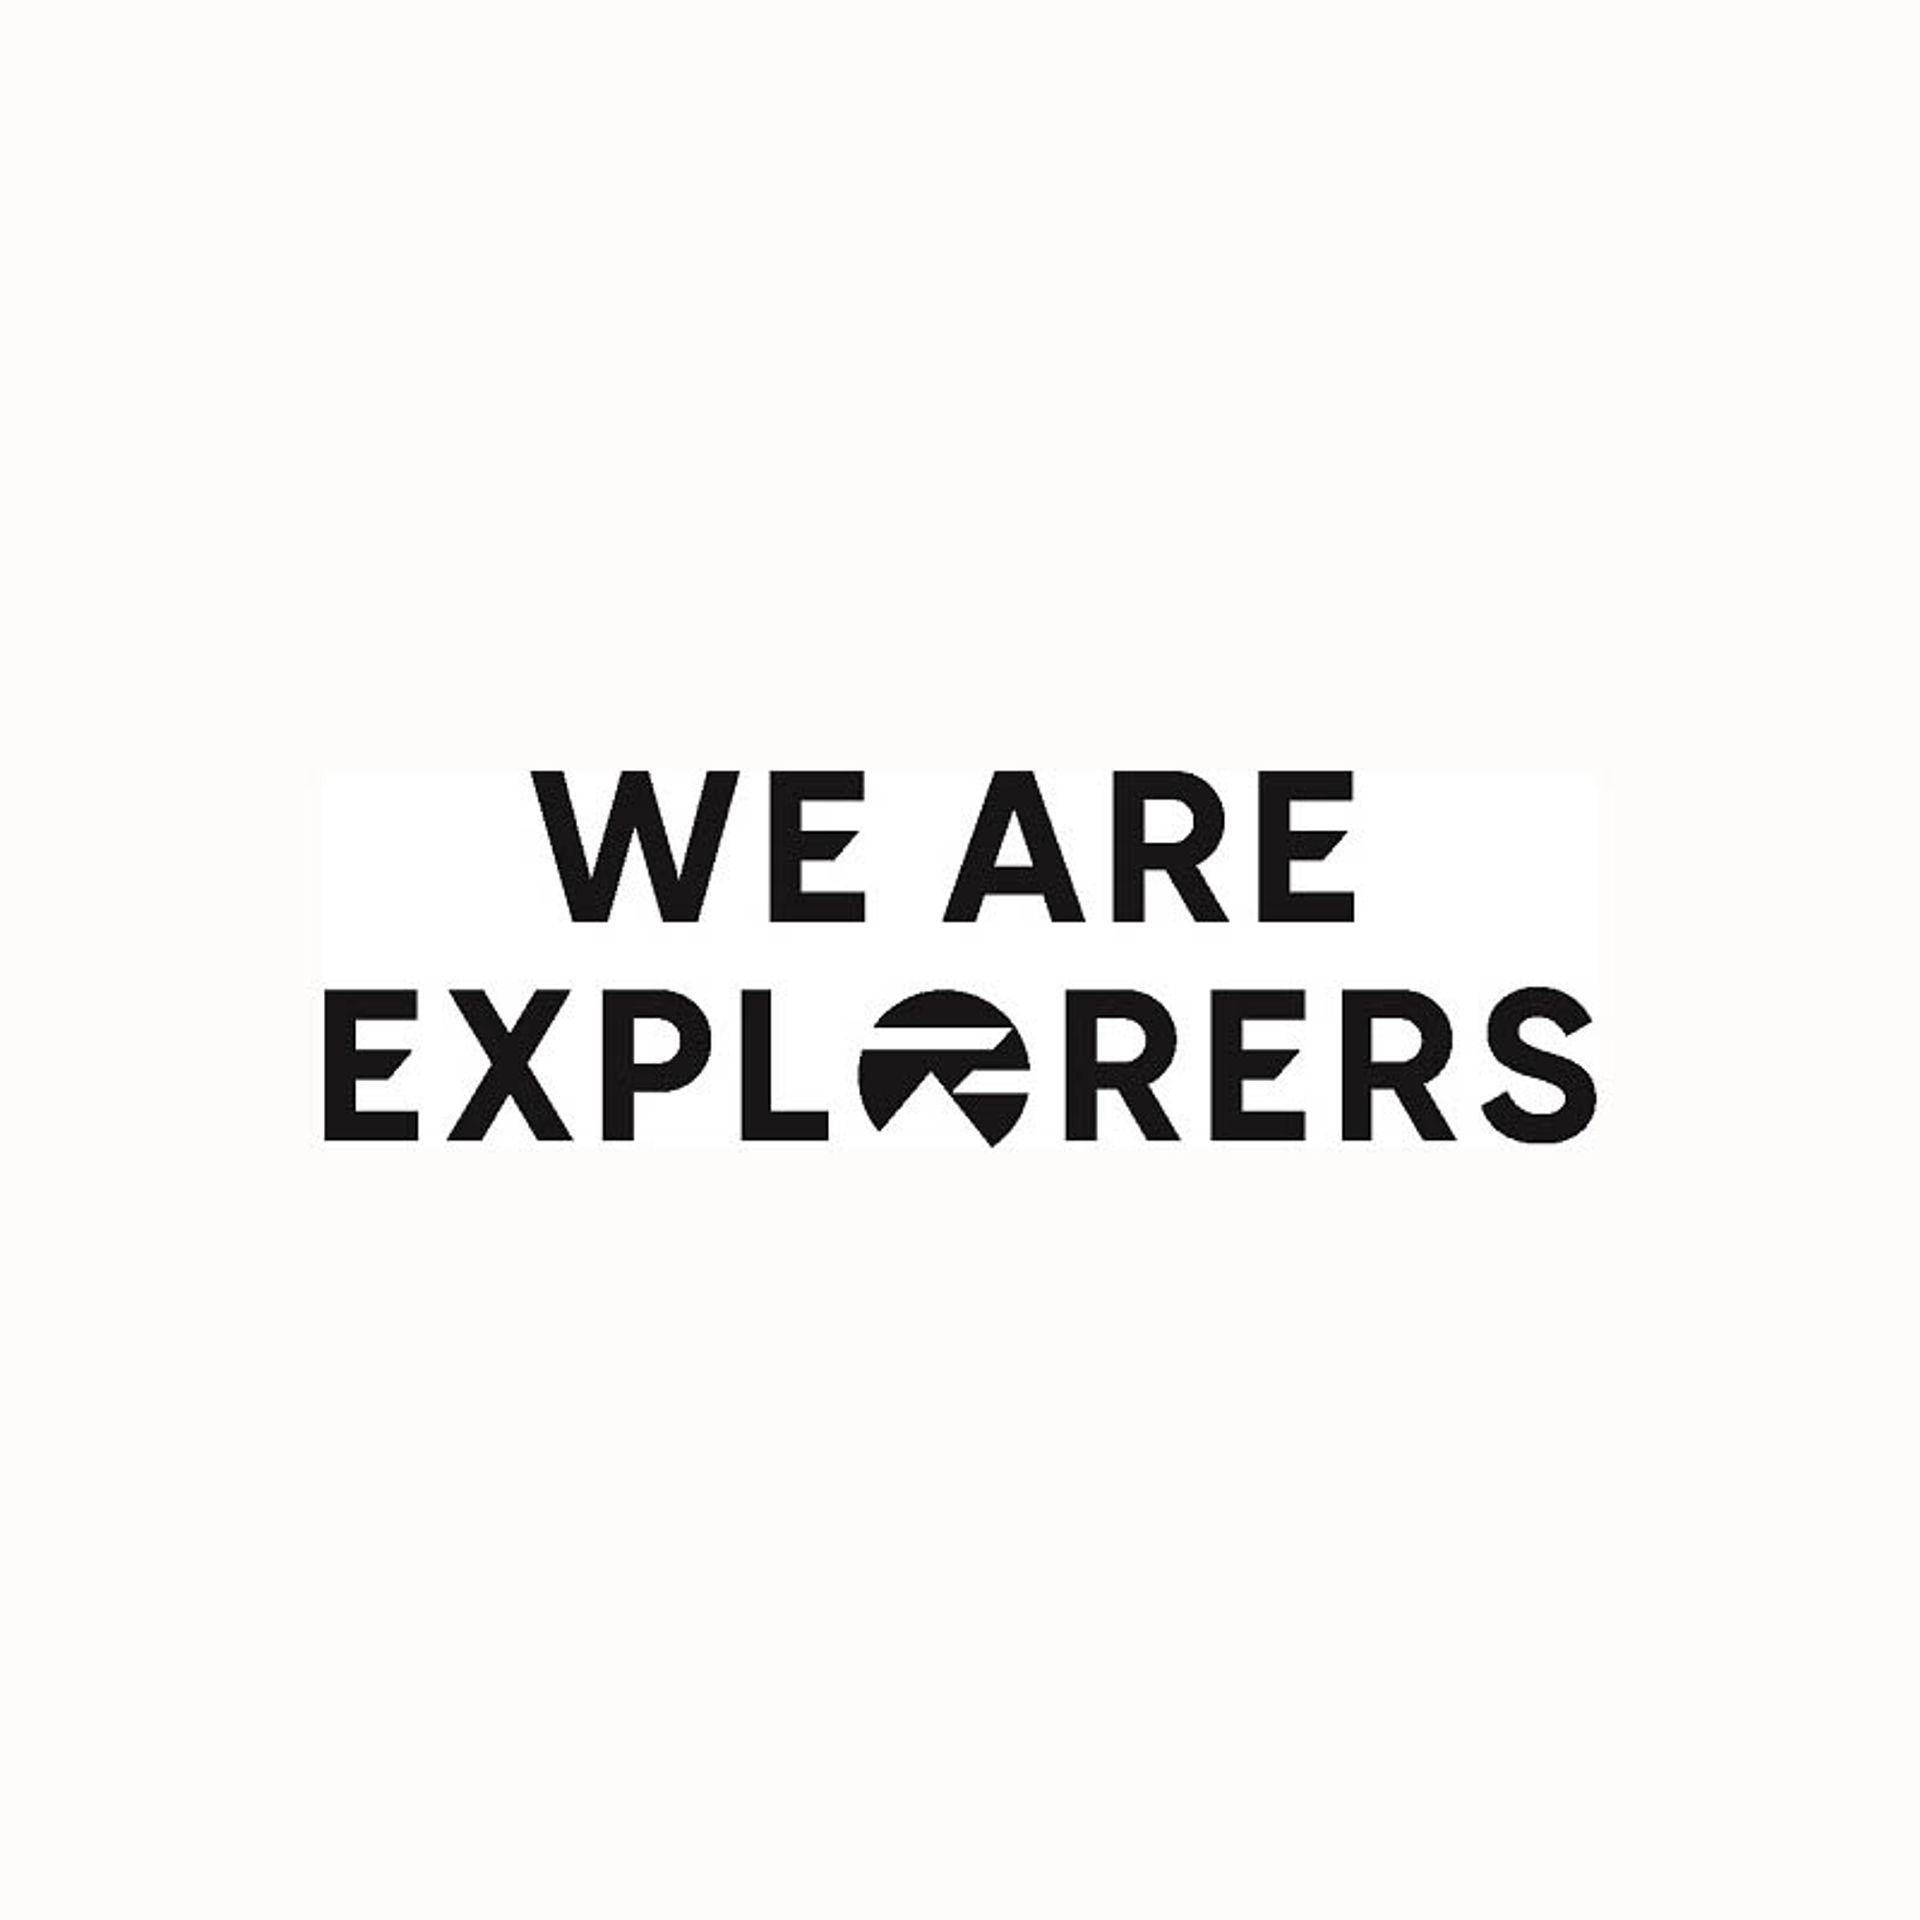 We are Explorers lol